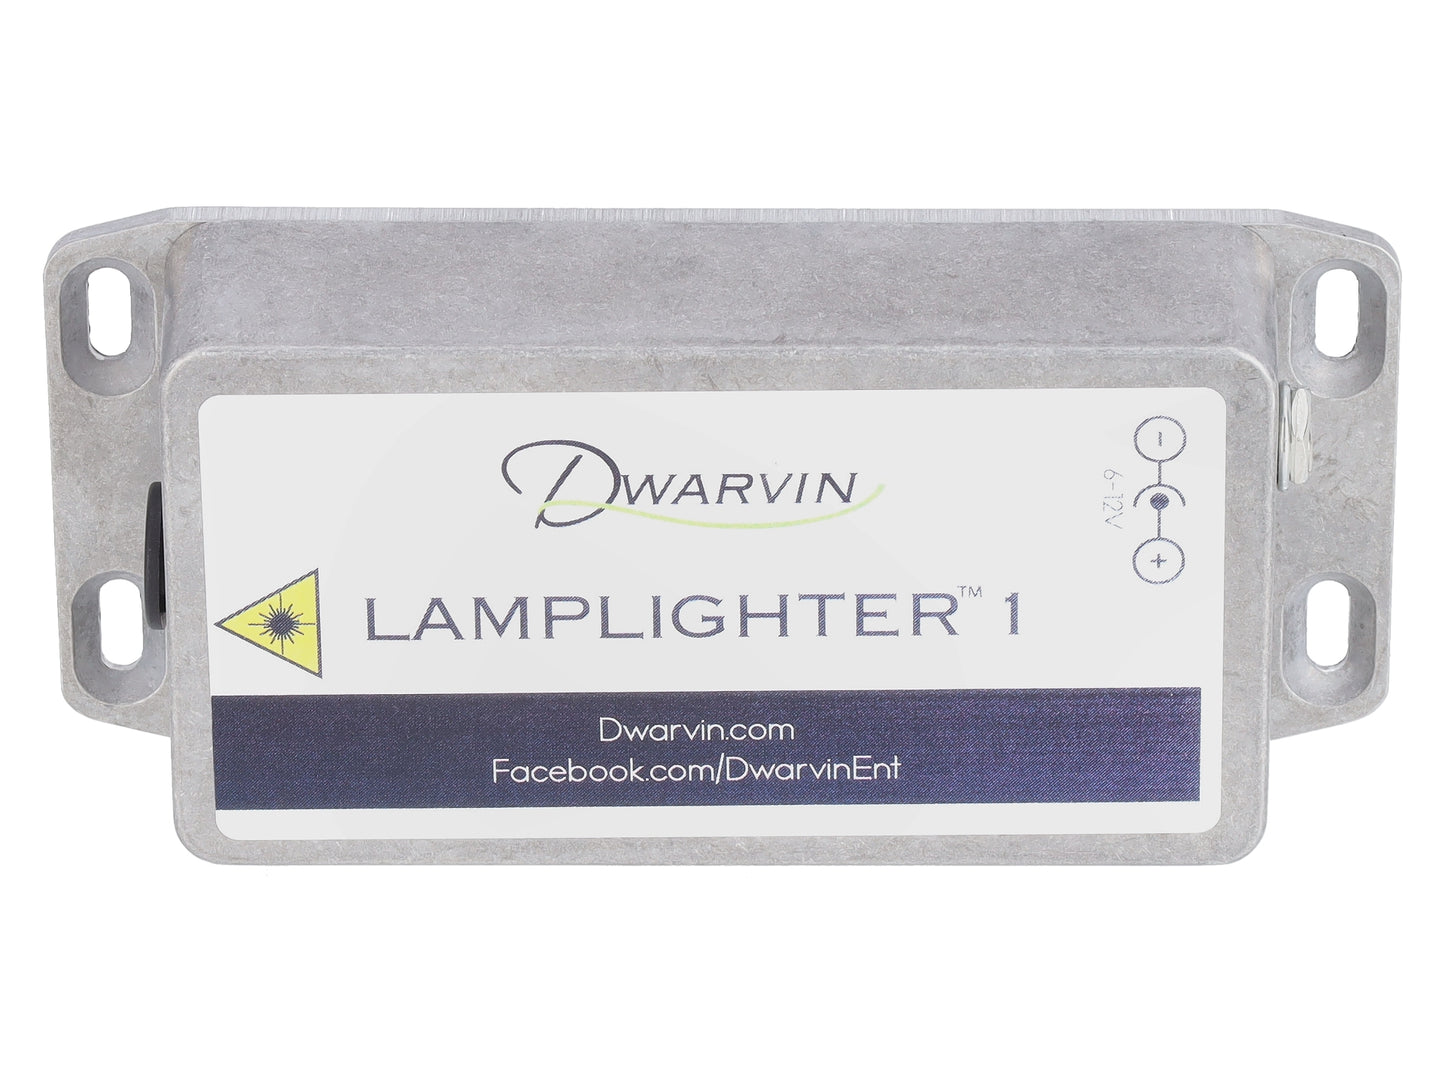 Dwarvin DV101 Lamplighter 1 for Fiber Lighting Systems